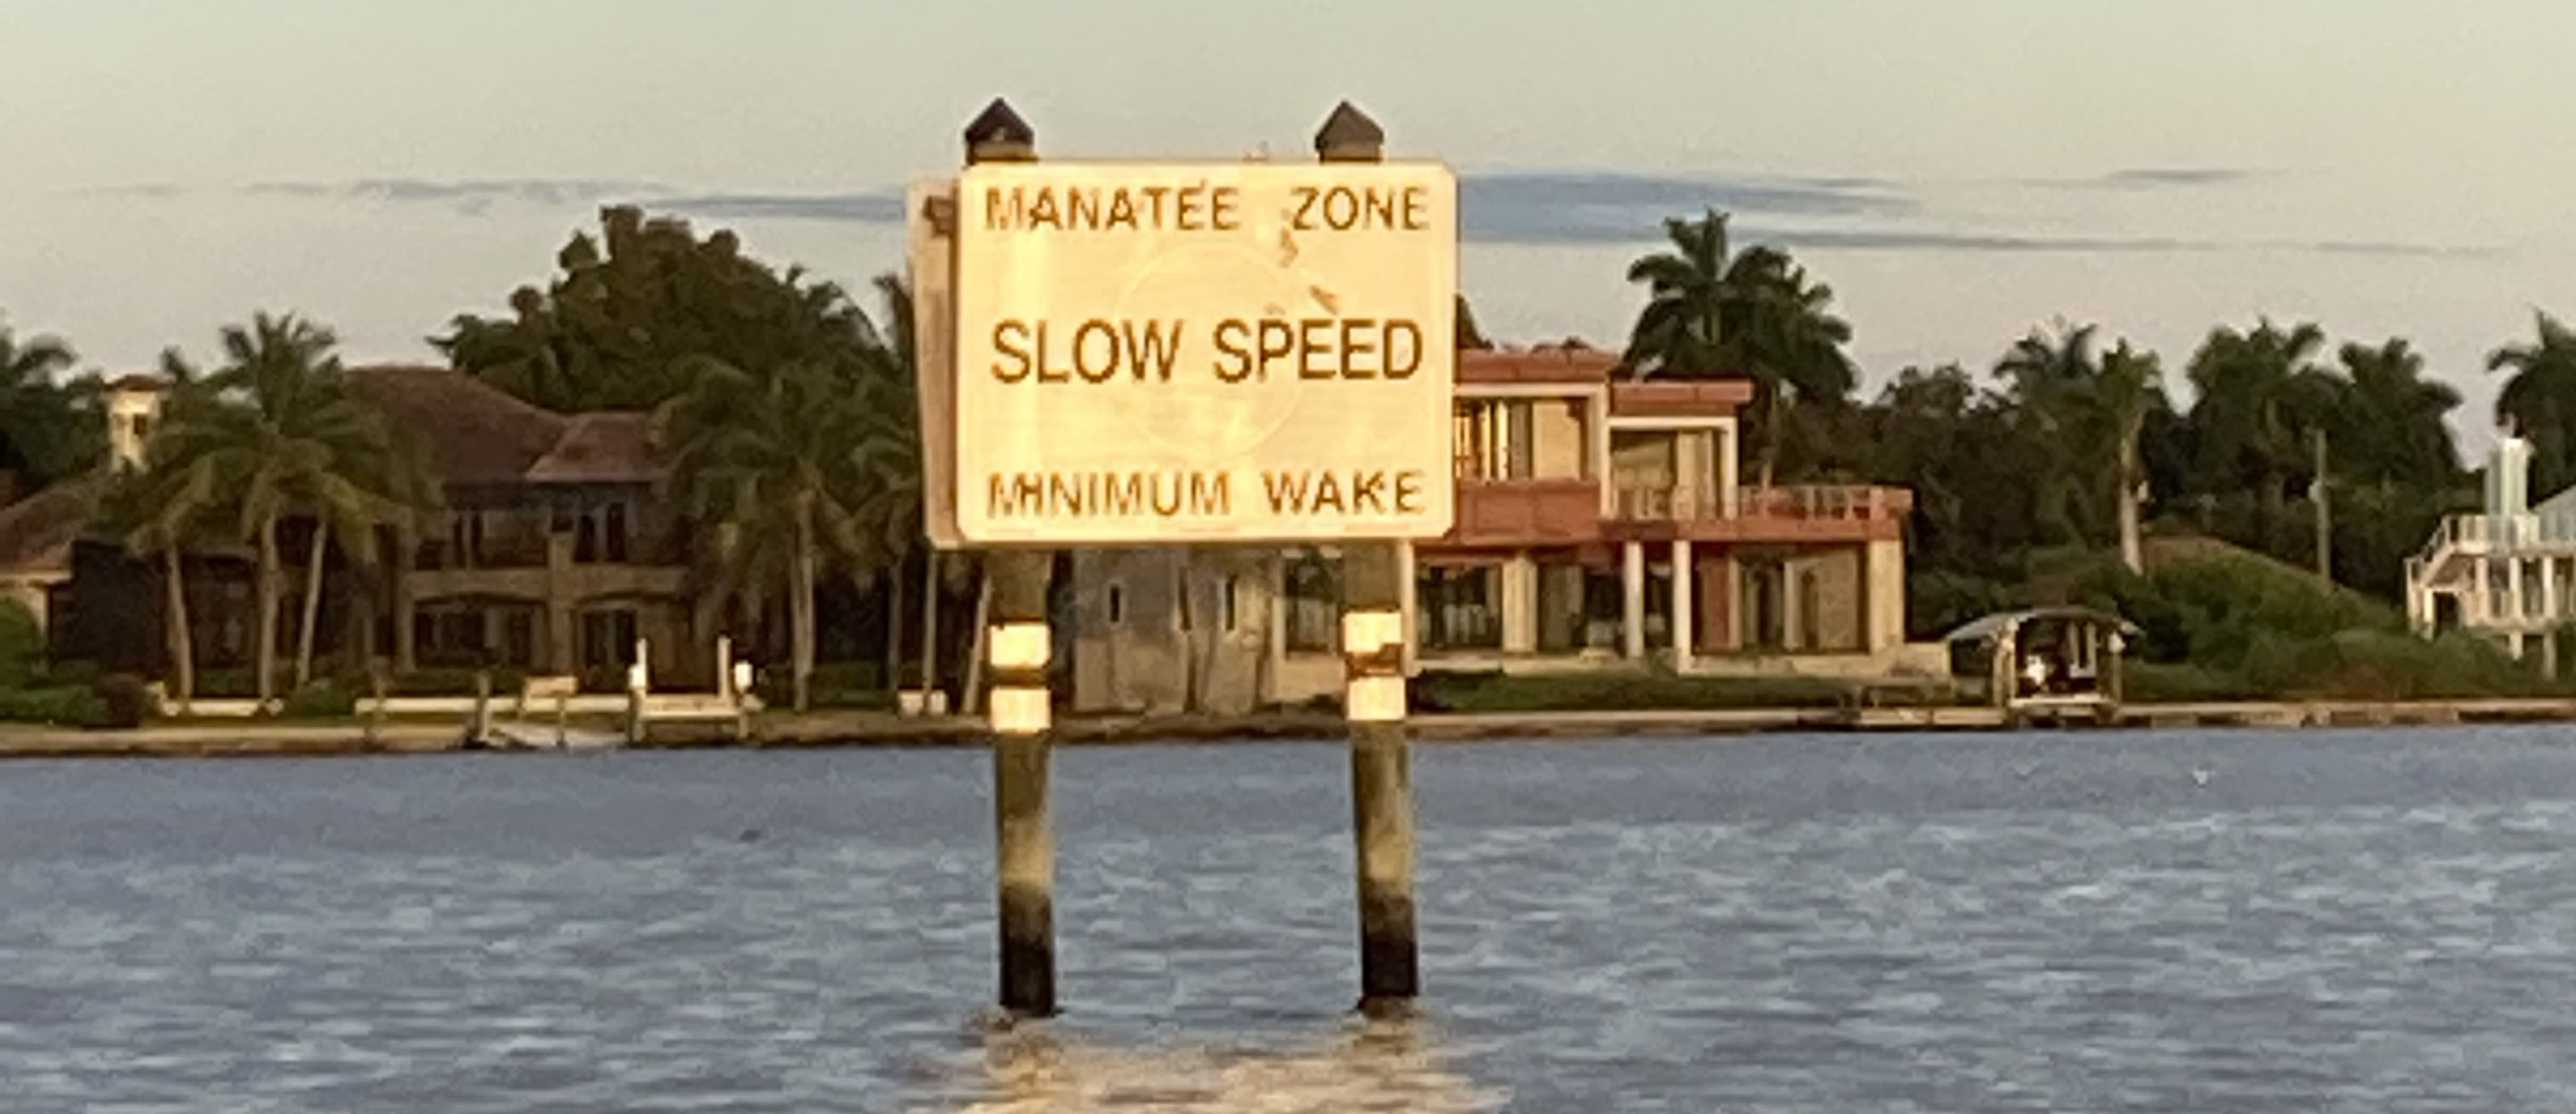 Naples Florida manatee sign